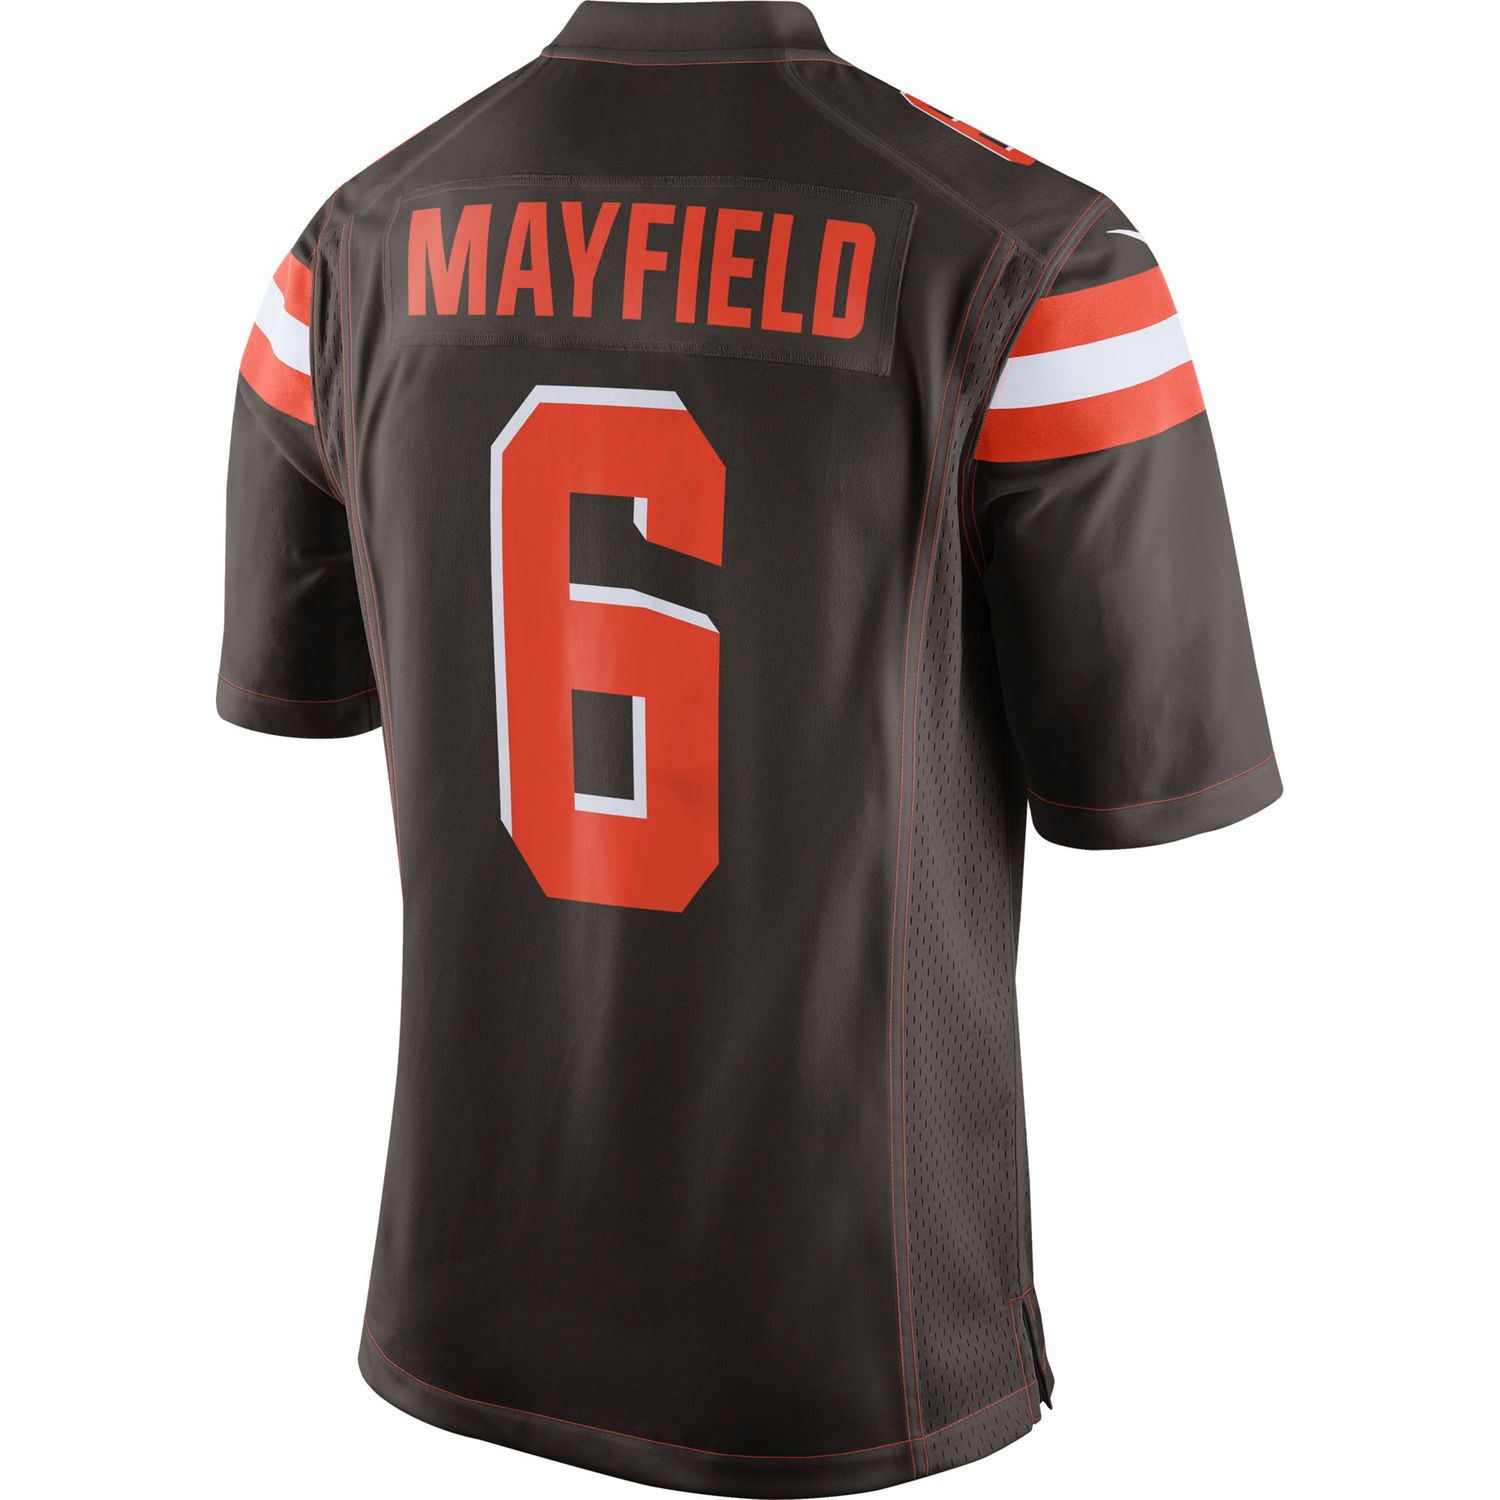 Nike Cleveland Browns Baker Mayfield Jersey